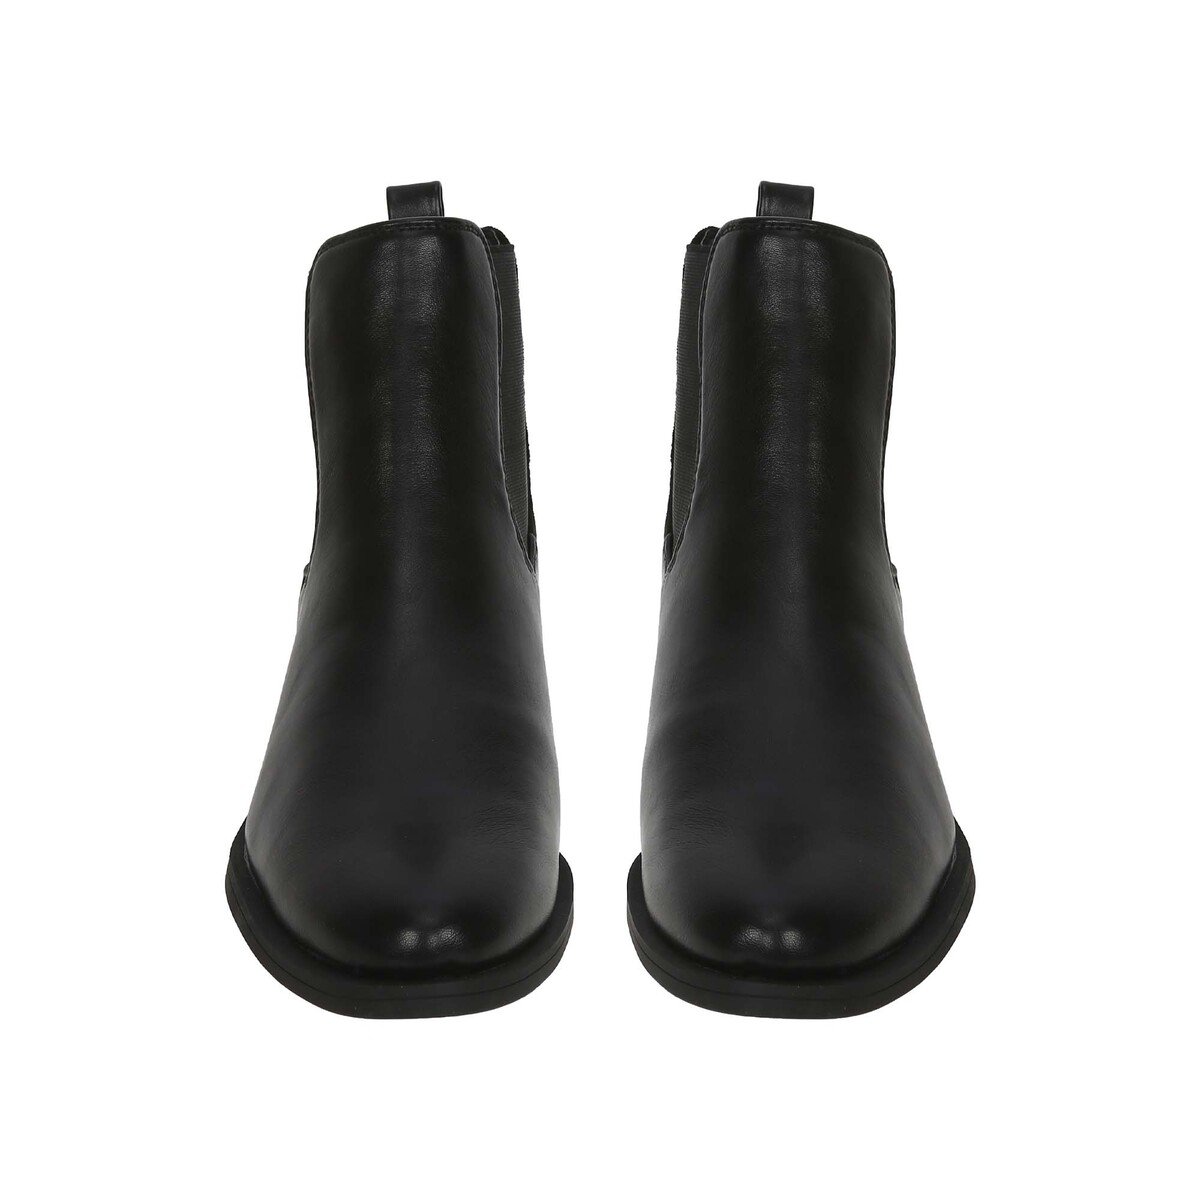 Eten Women's Fashion Boots B8058-2 Black, 37